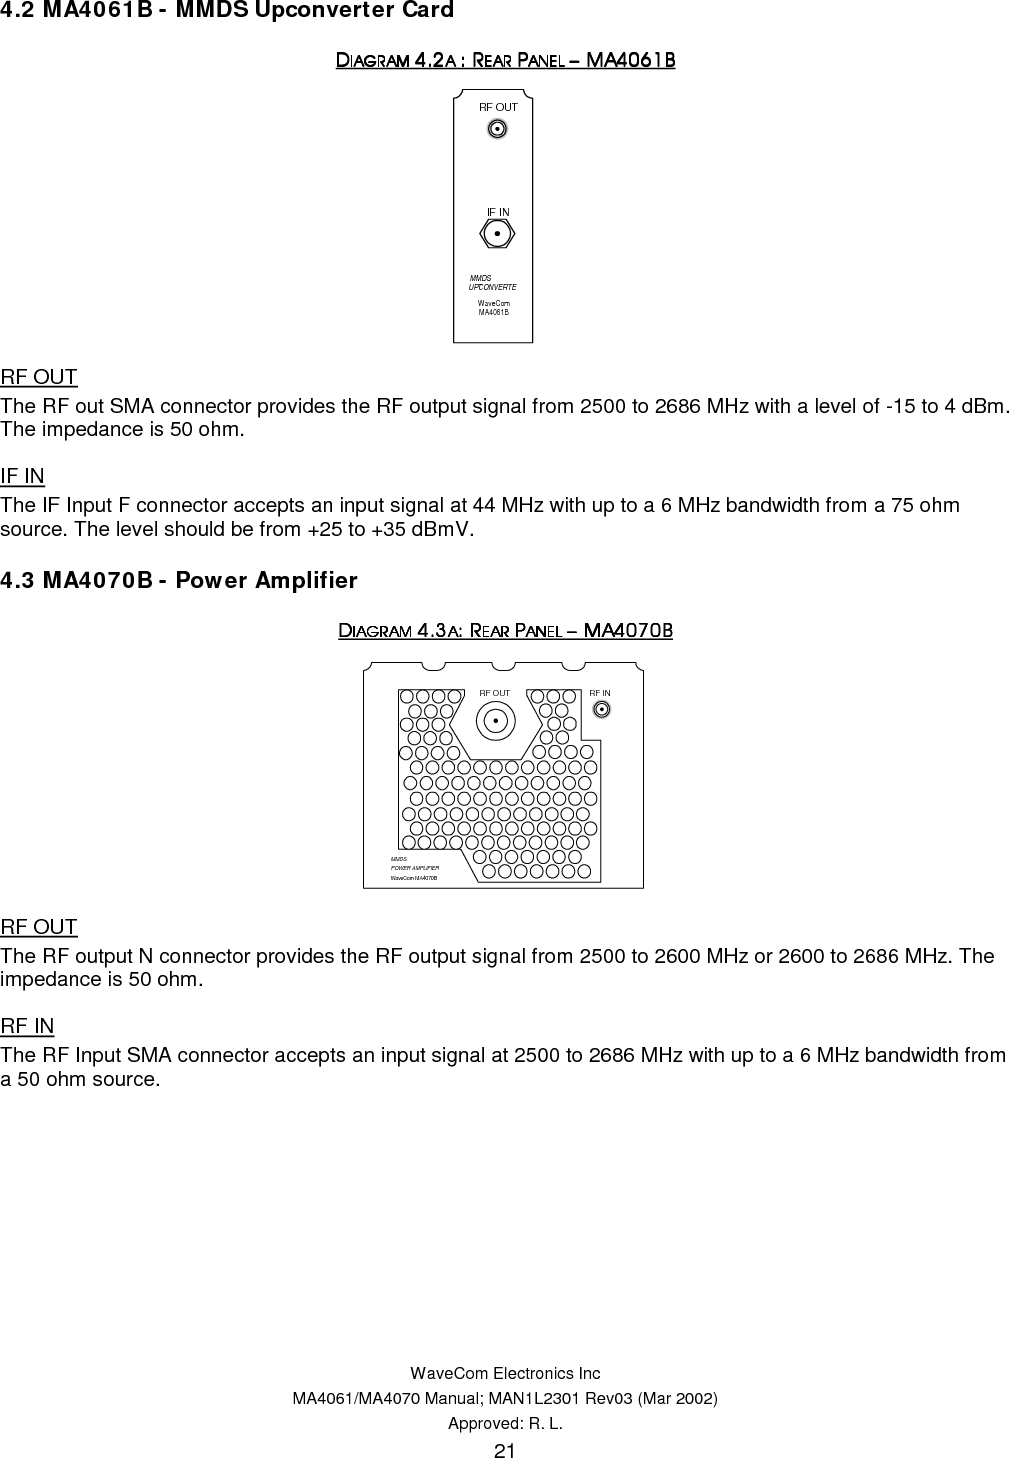   WaveCom Electronics Inc MA4061/MA4070 Manual; MAN1L2301 Rev03 (Mar 2002) Approved: R. L. 22  